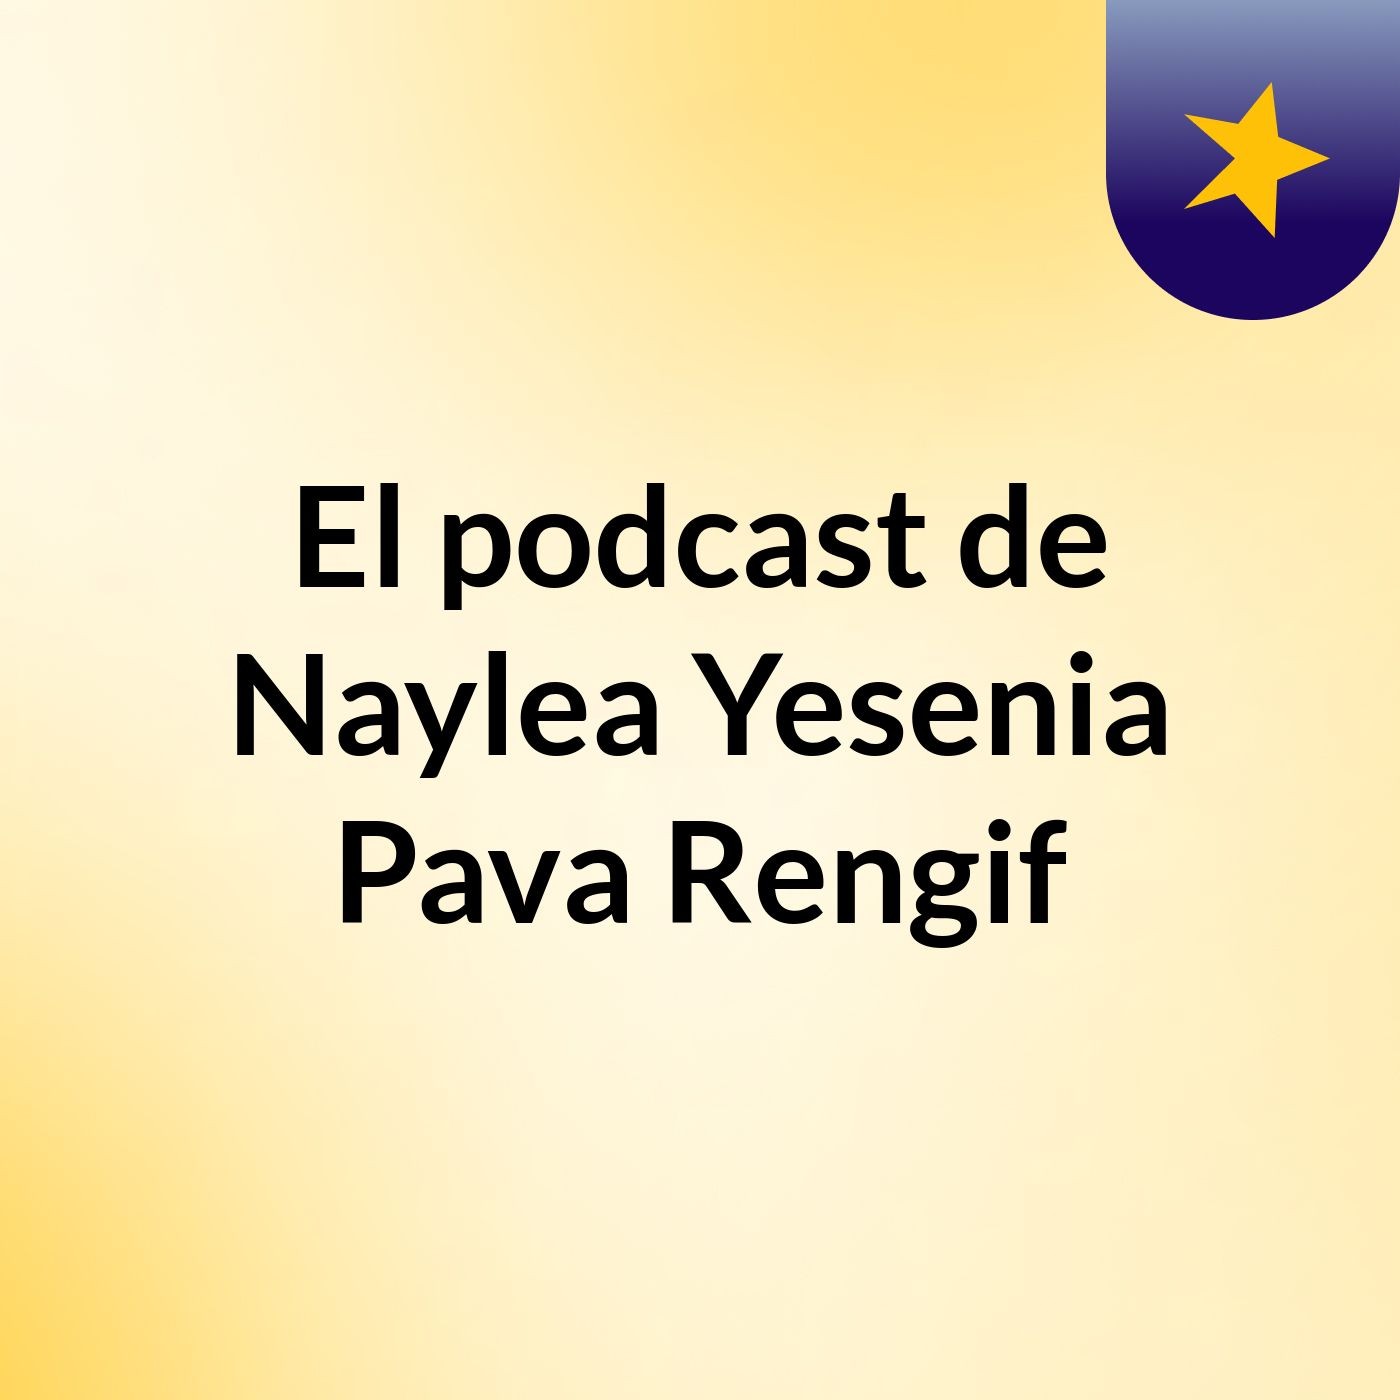 Episodio 3 - El podcast de Naylea Yesenia Pava Rengif